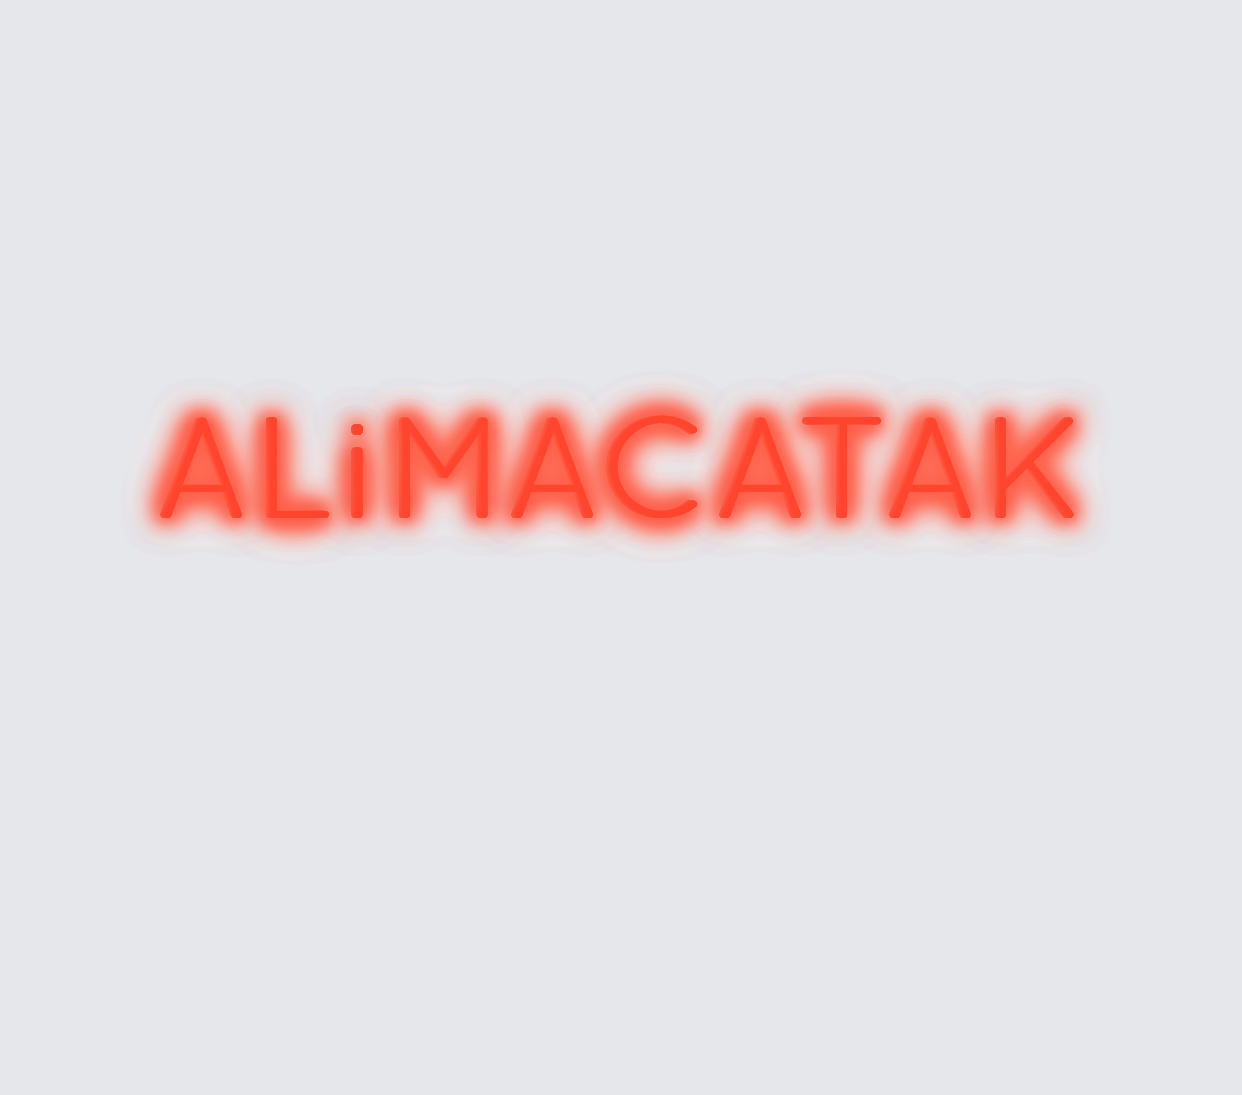 Custom neon sign - ALiMACATAK